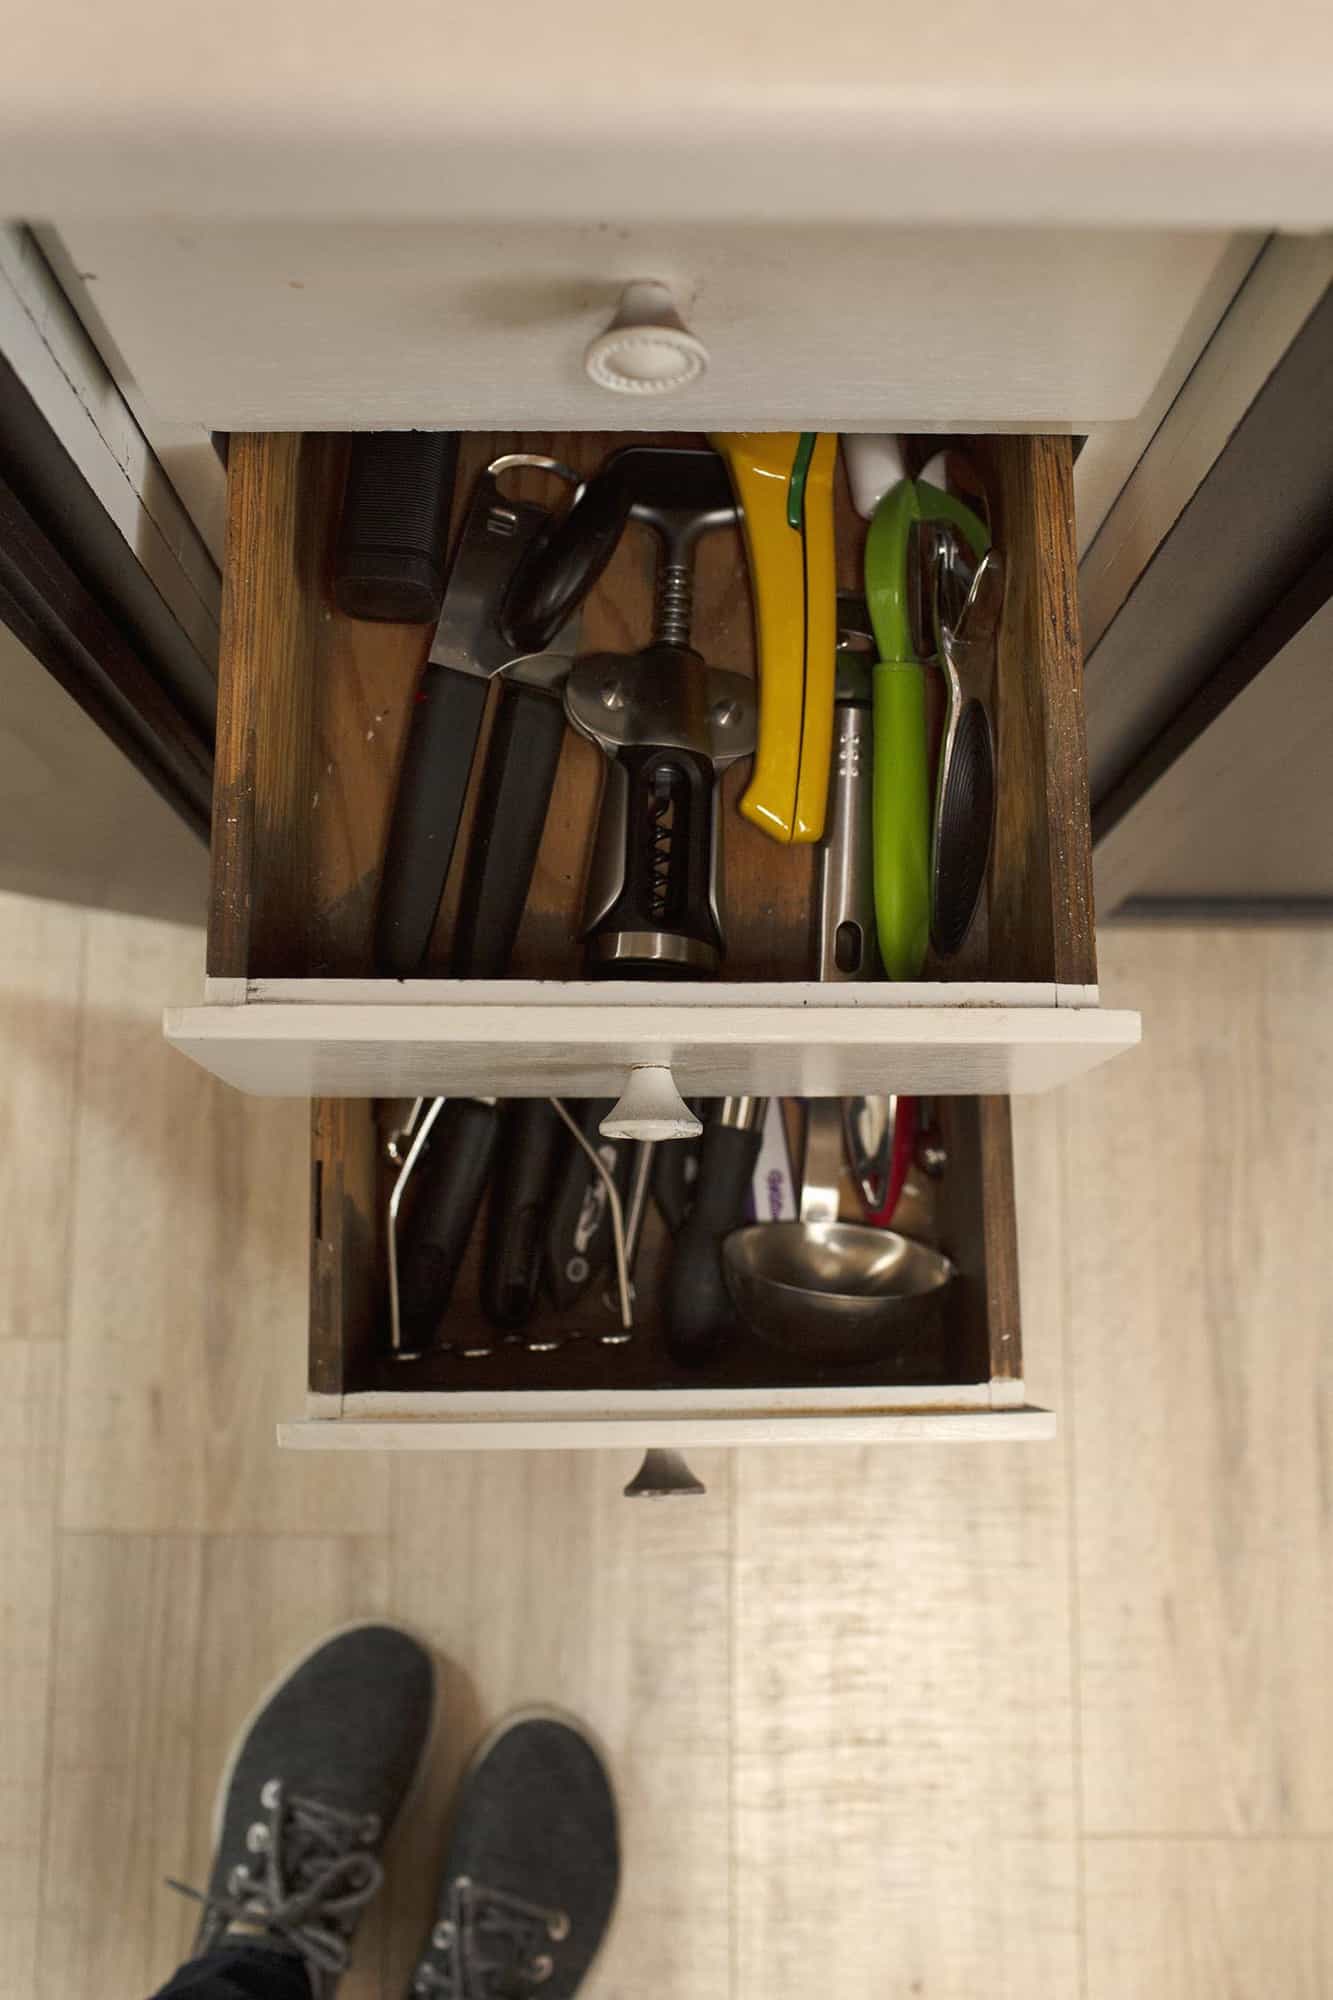 https://abeautifulmess.com/wp-content/uploads/2019/03/kitchen-drawers.jpg